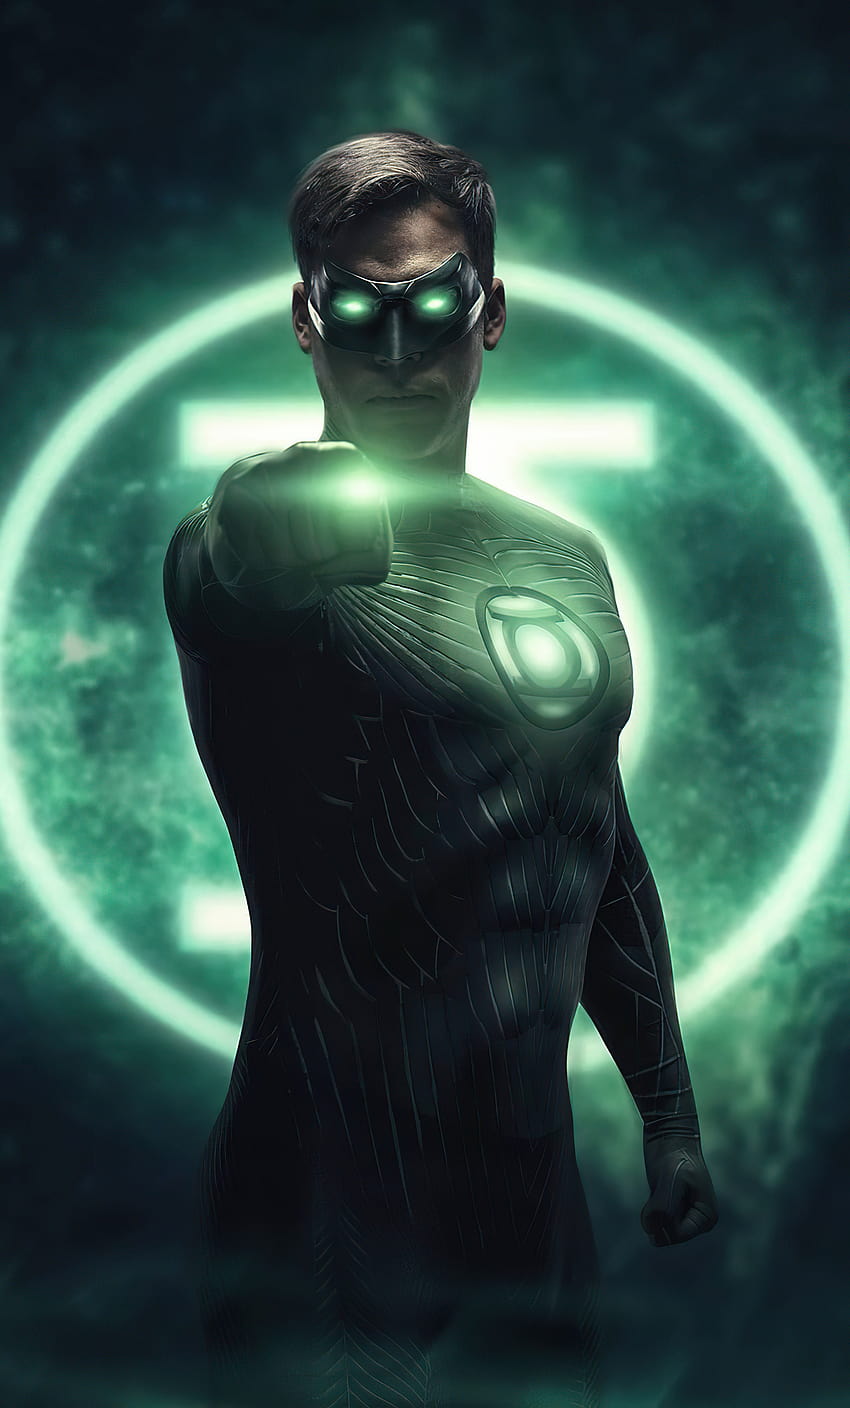 1280x2120 Hal Jordan Lanterna Verde Injustice 2 iPhone, sfondi e vestito da lanterna verde hal jordan Sfondo del telefono HD